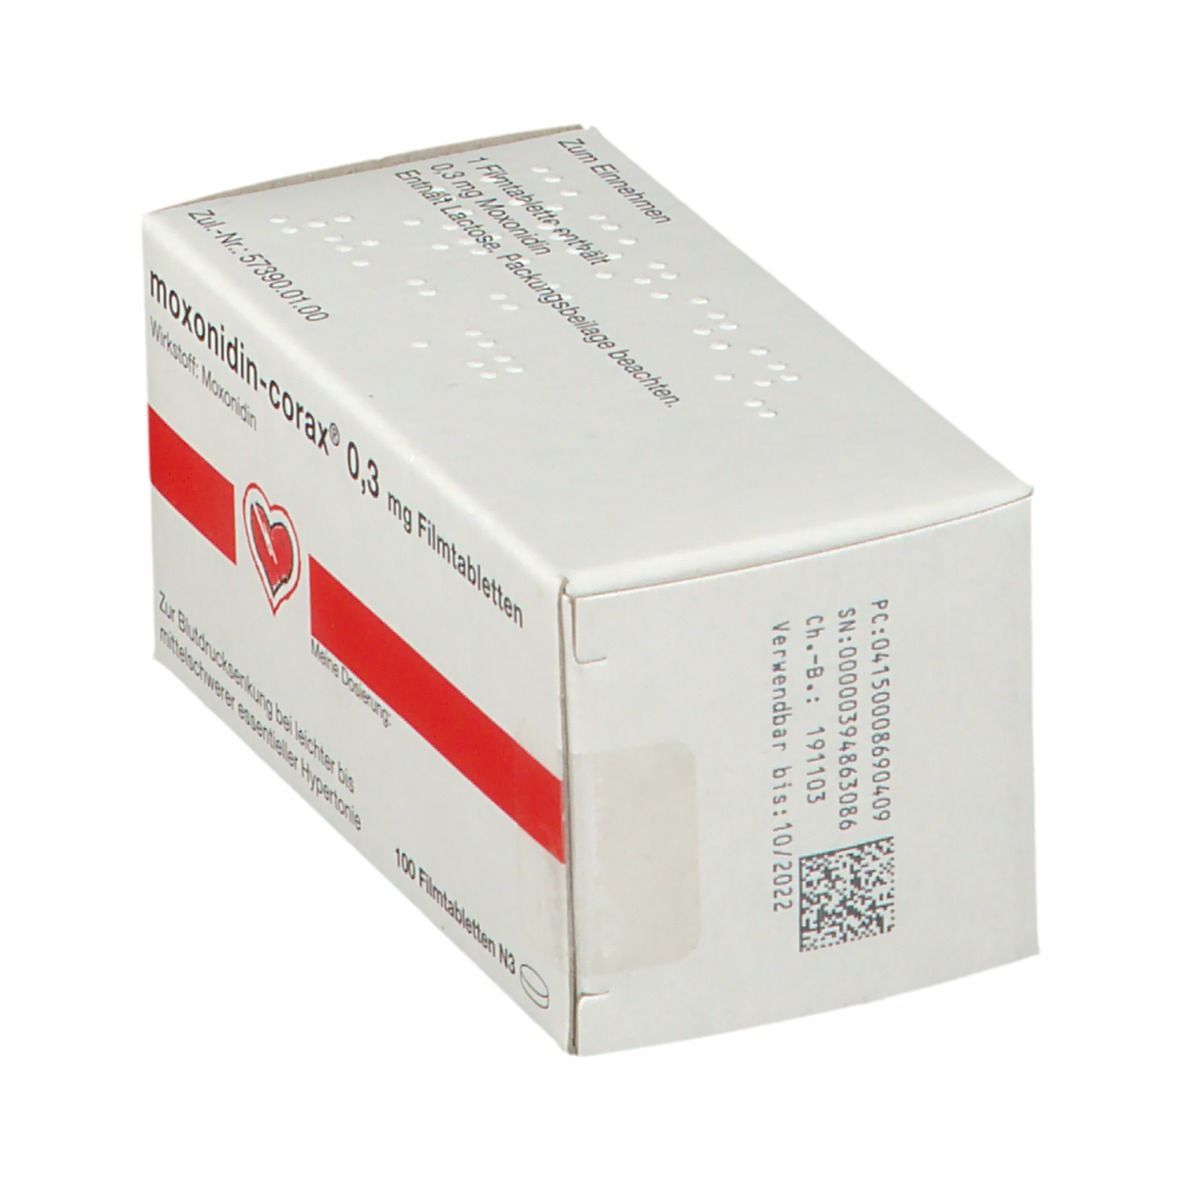 moxonidin-corax® 0,3 mg